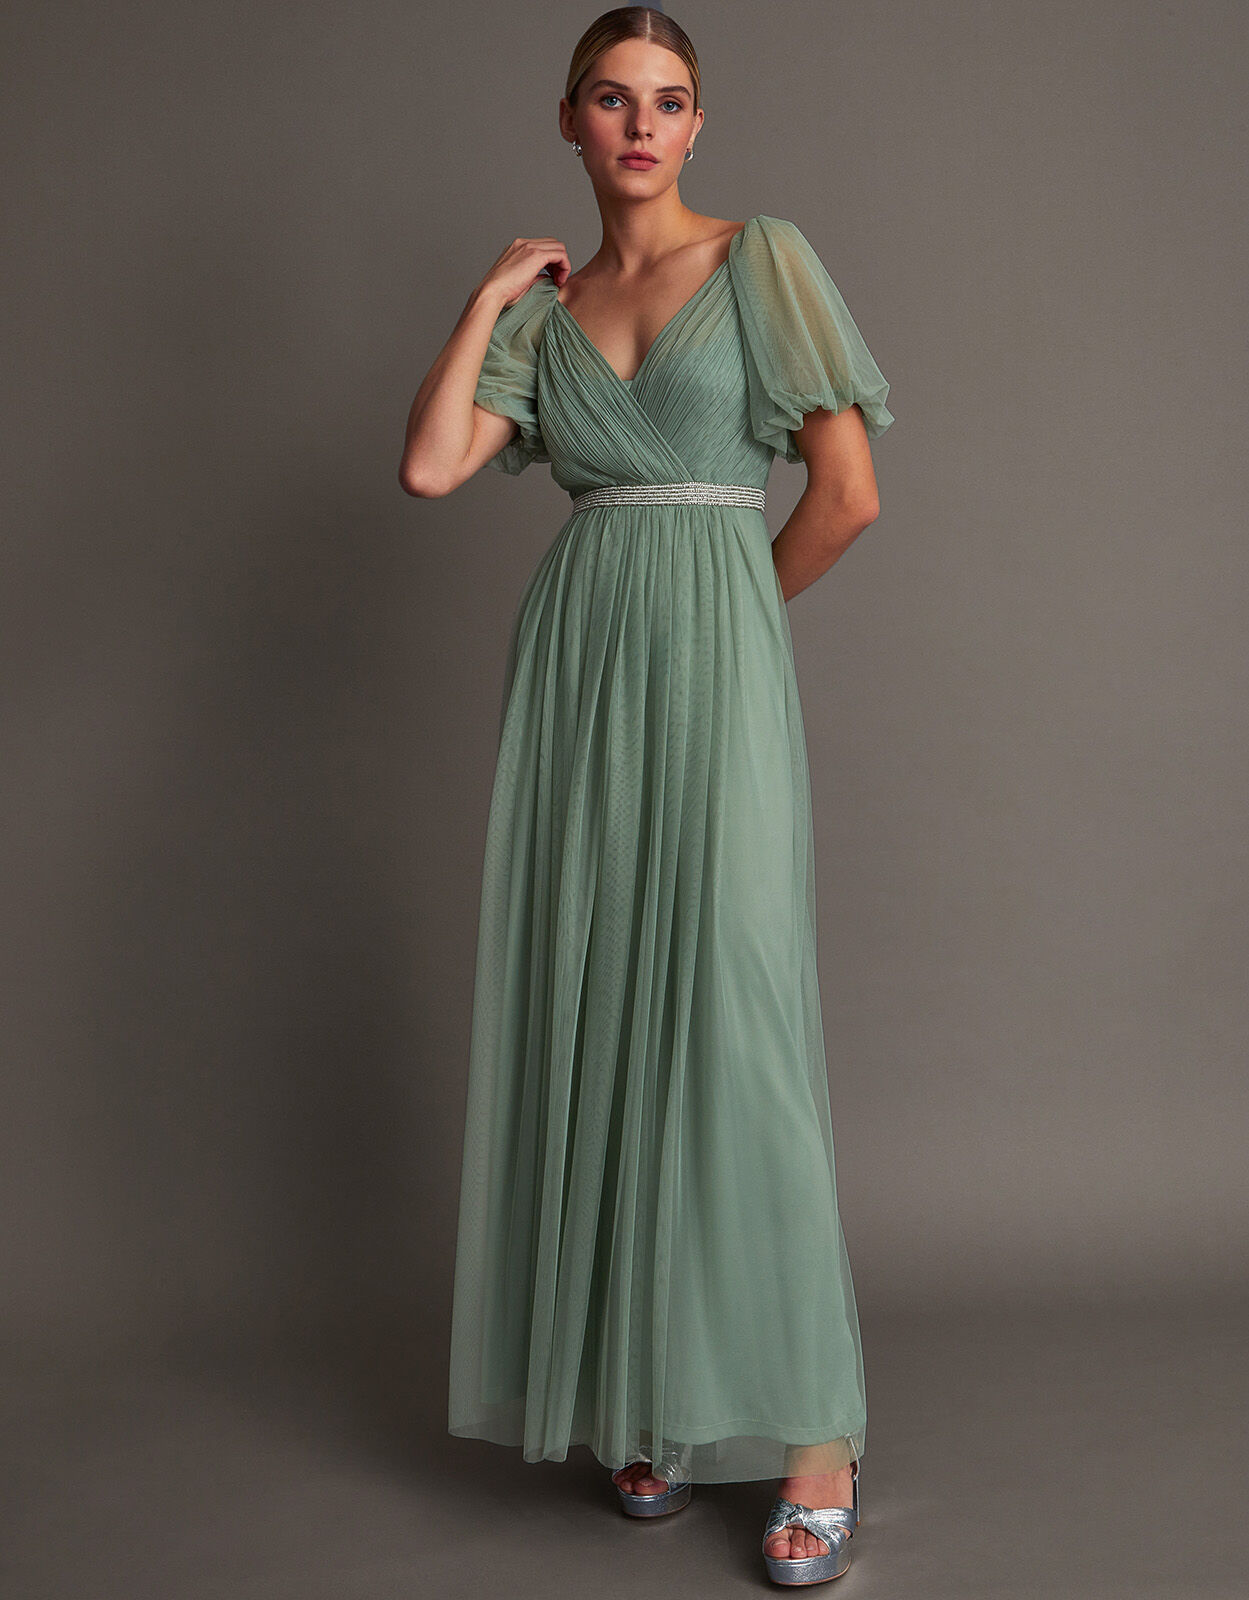 Luxury Feathered Plunge Neck Embellished Evening Dress - Evening Dresses,  Made To Order Designer Collection